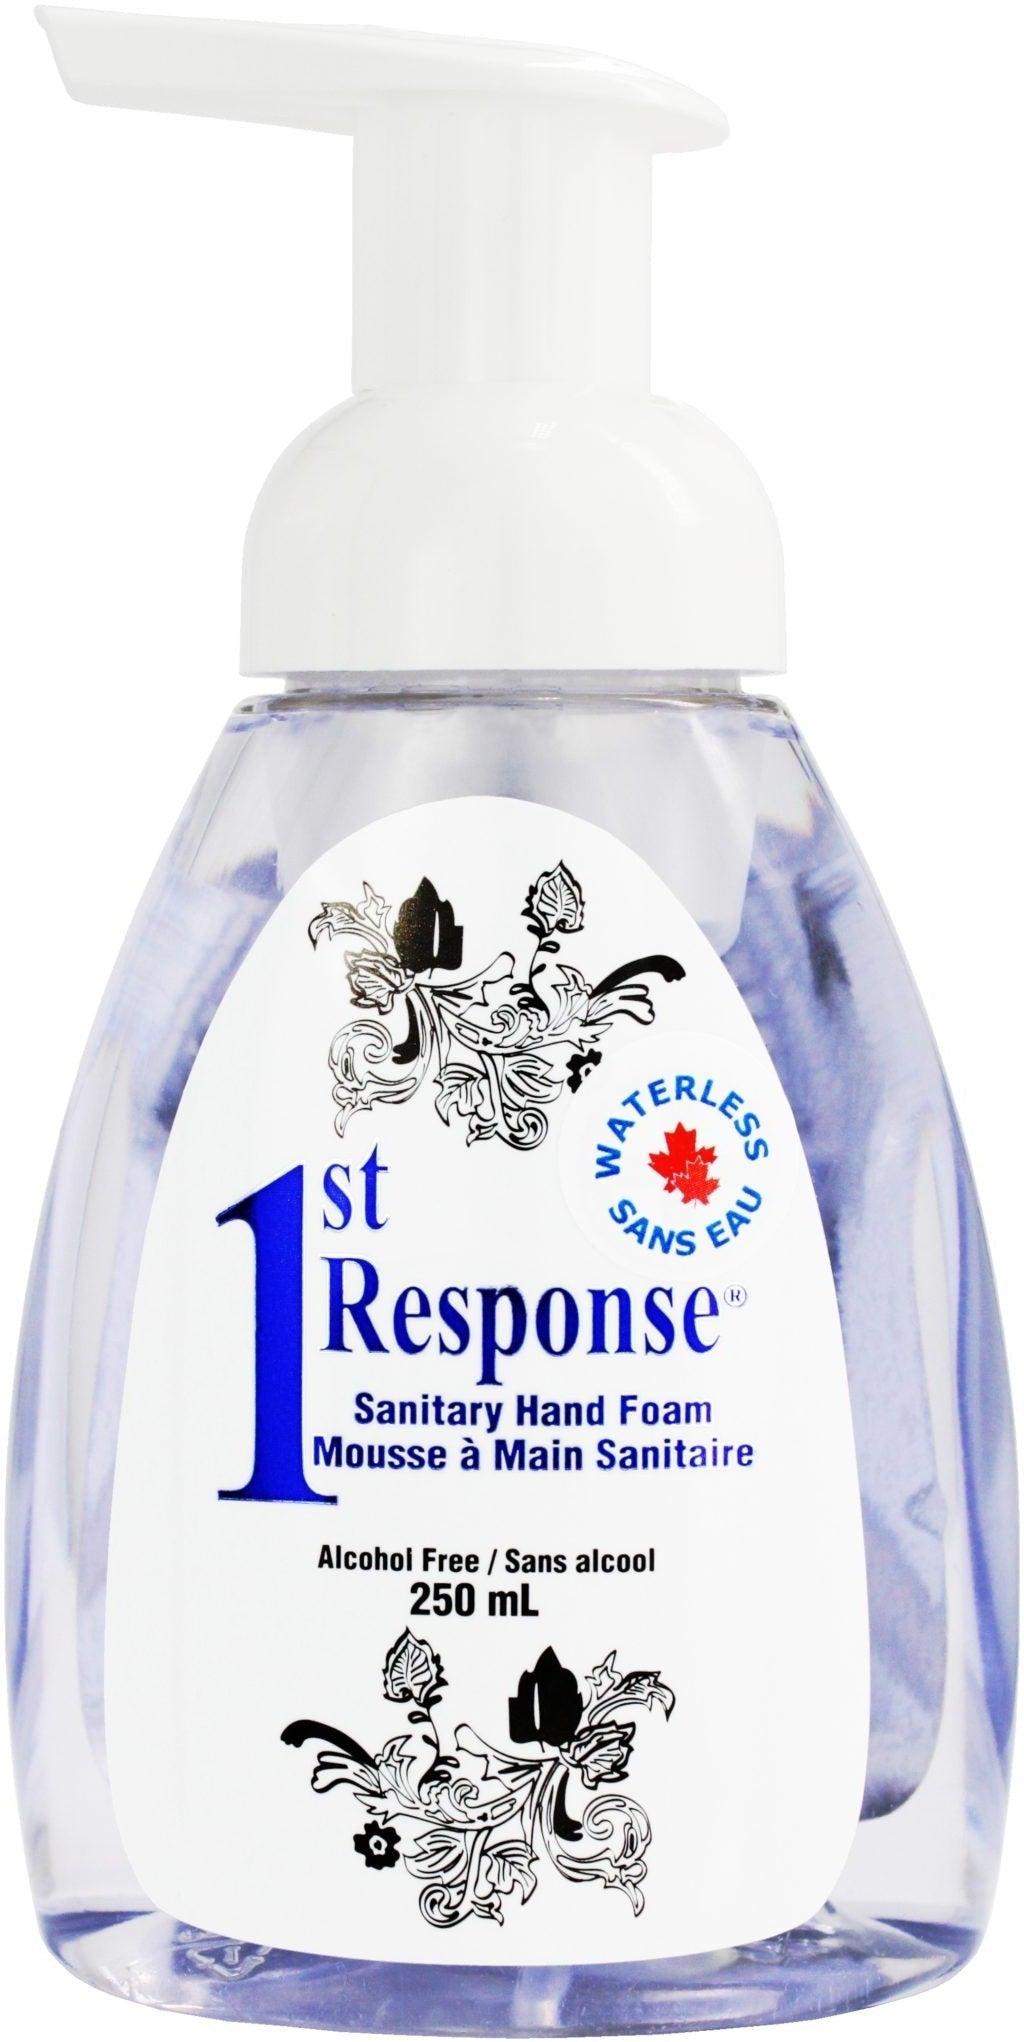 1st Response - 250 ml Alcohol-Free Hand Foam Sanitizer with Pump, 12Btl/Cs - 89-02